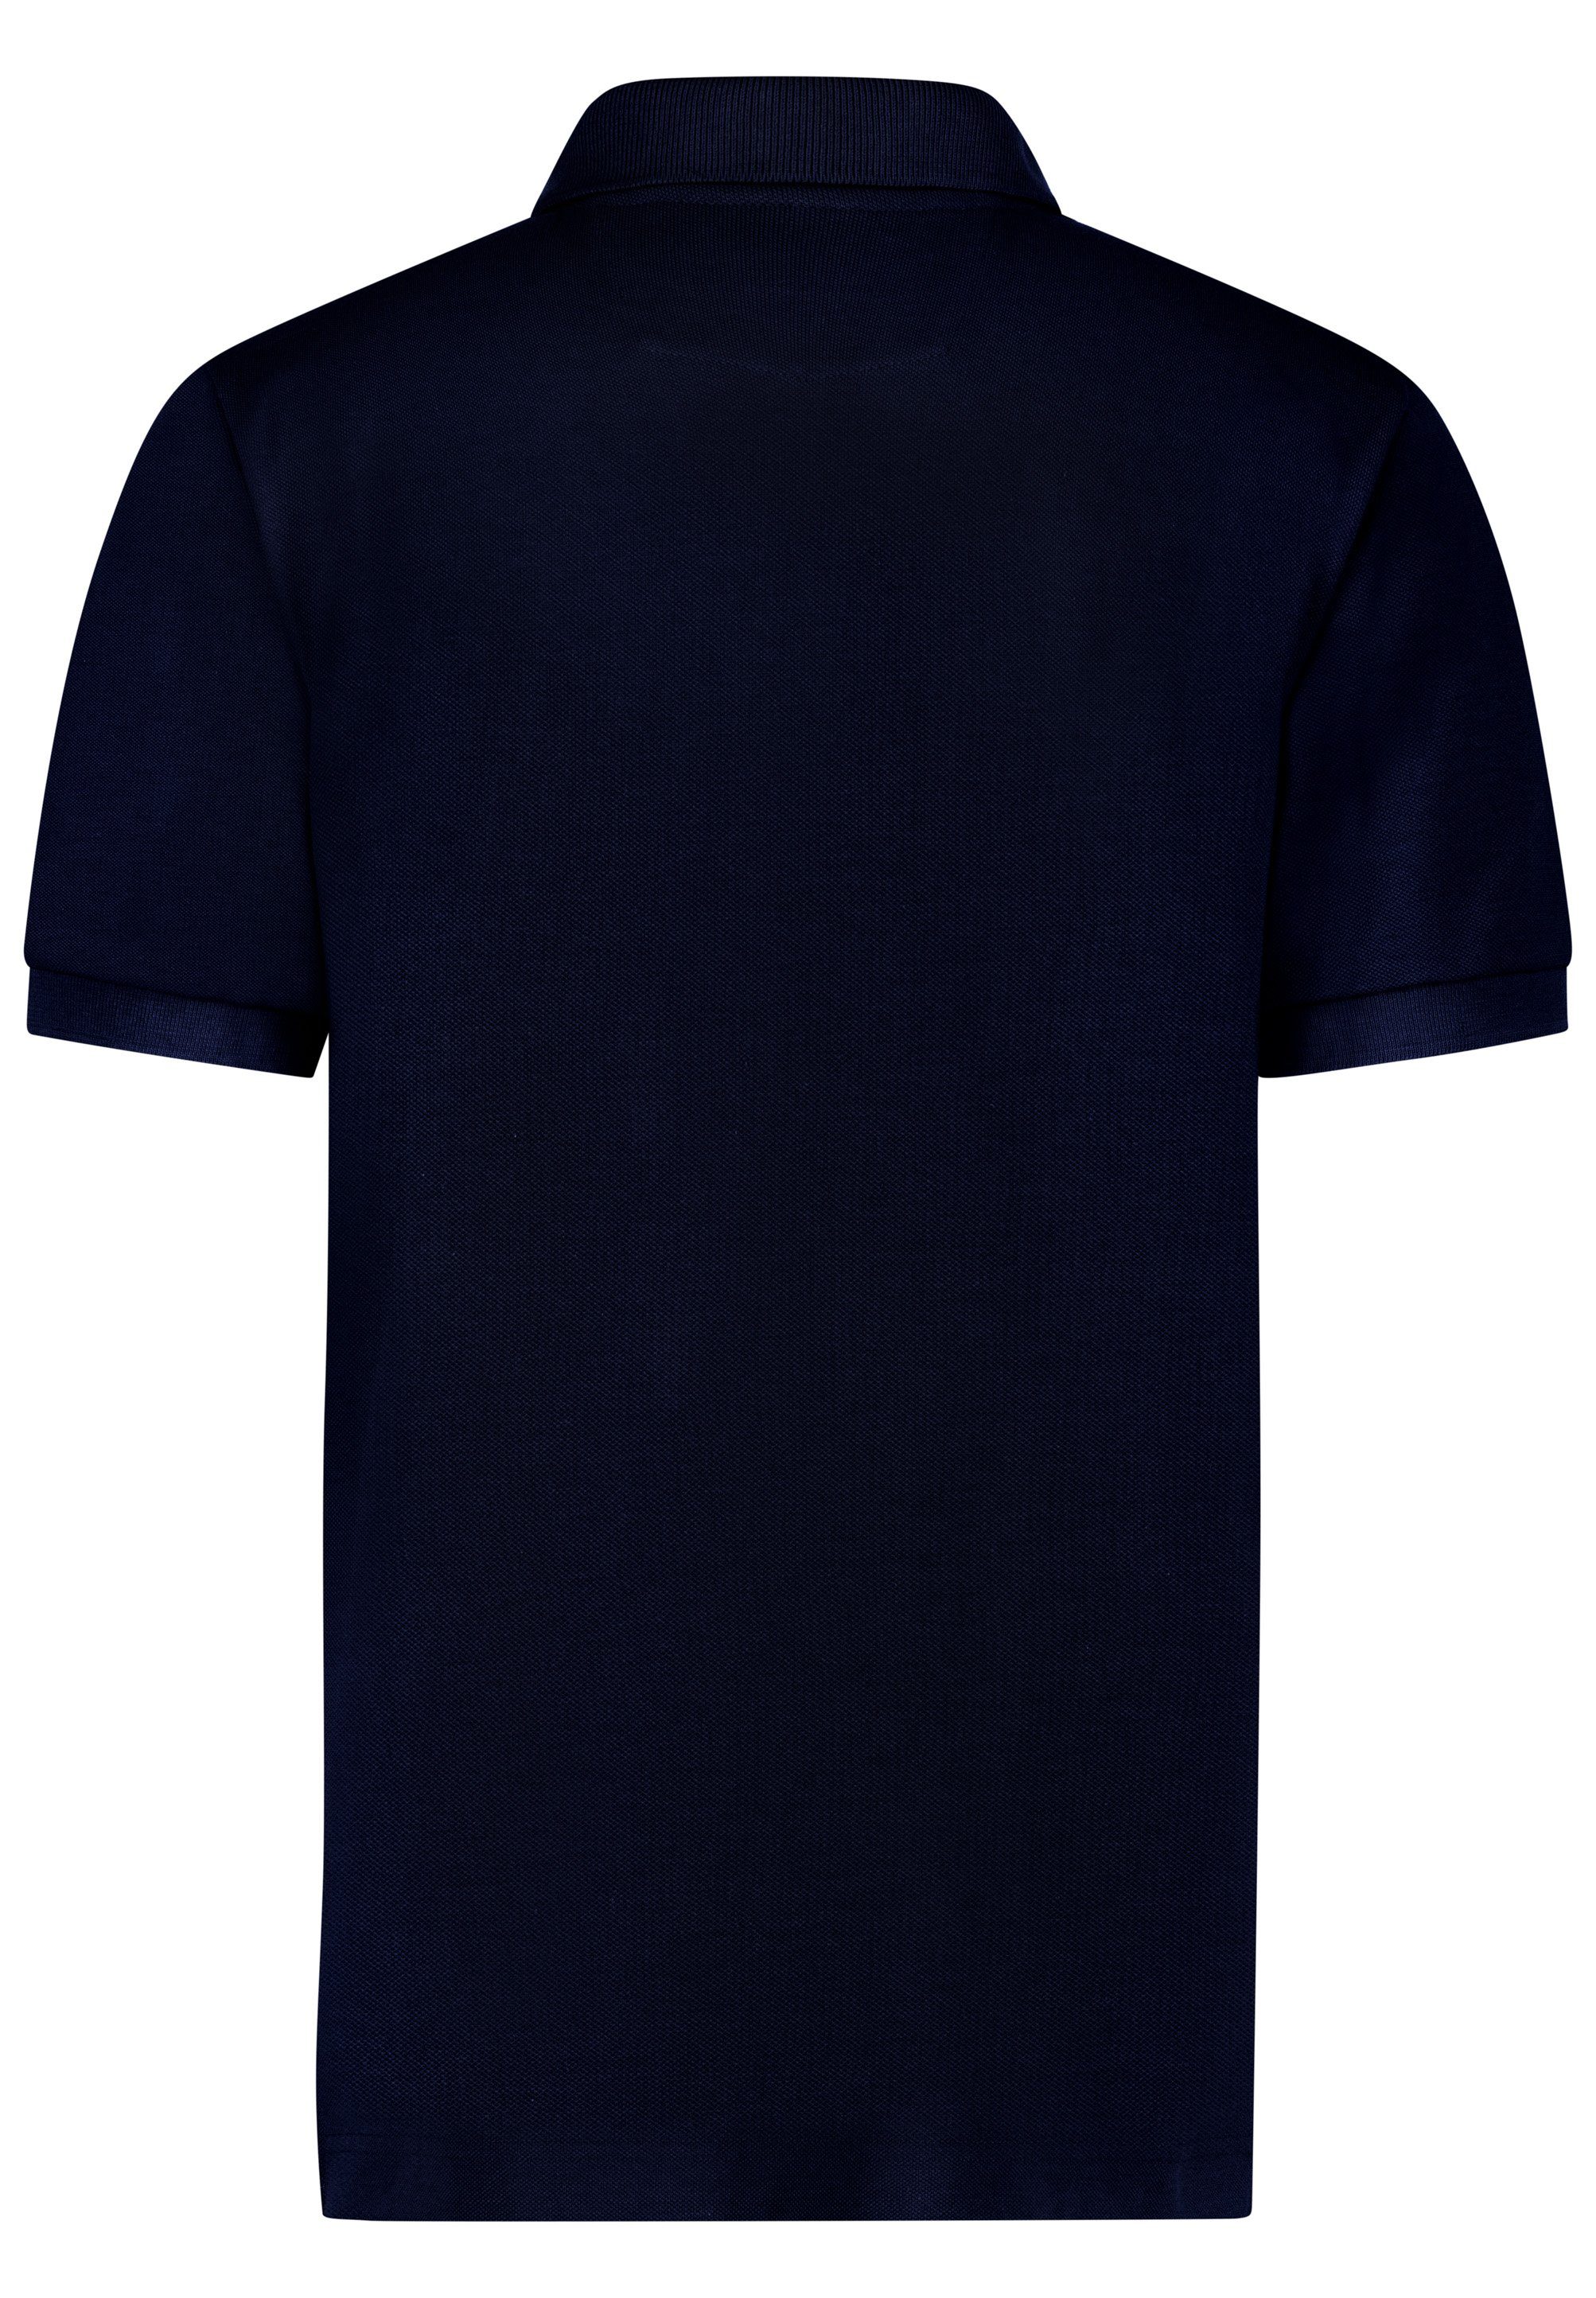 dunkelblau Poloshirt mit Bioactive antimikrobieller Louis Funktion